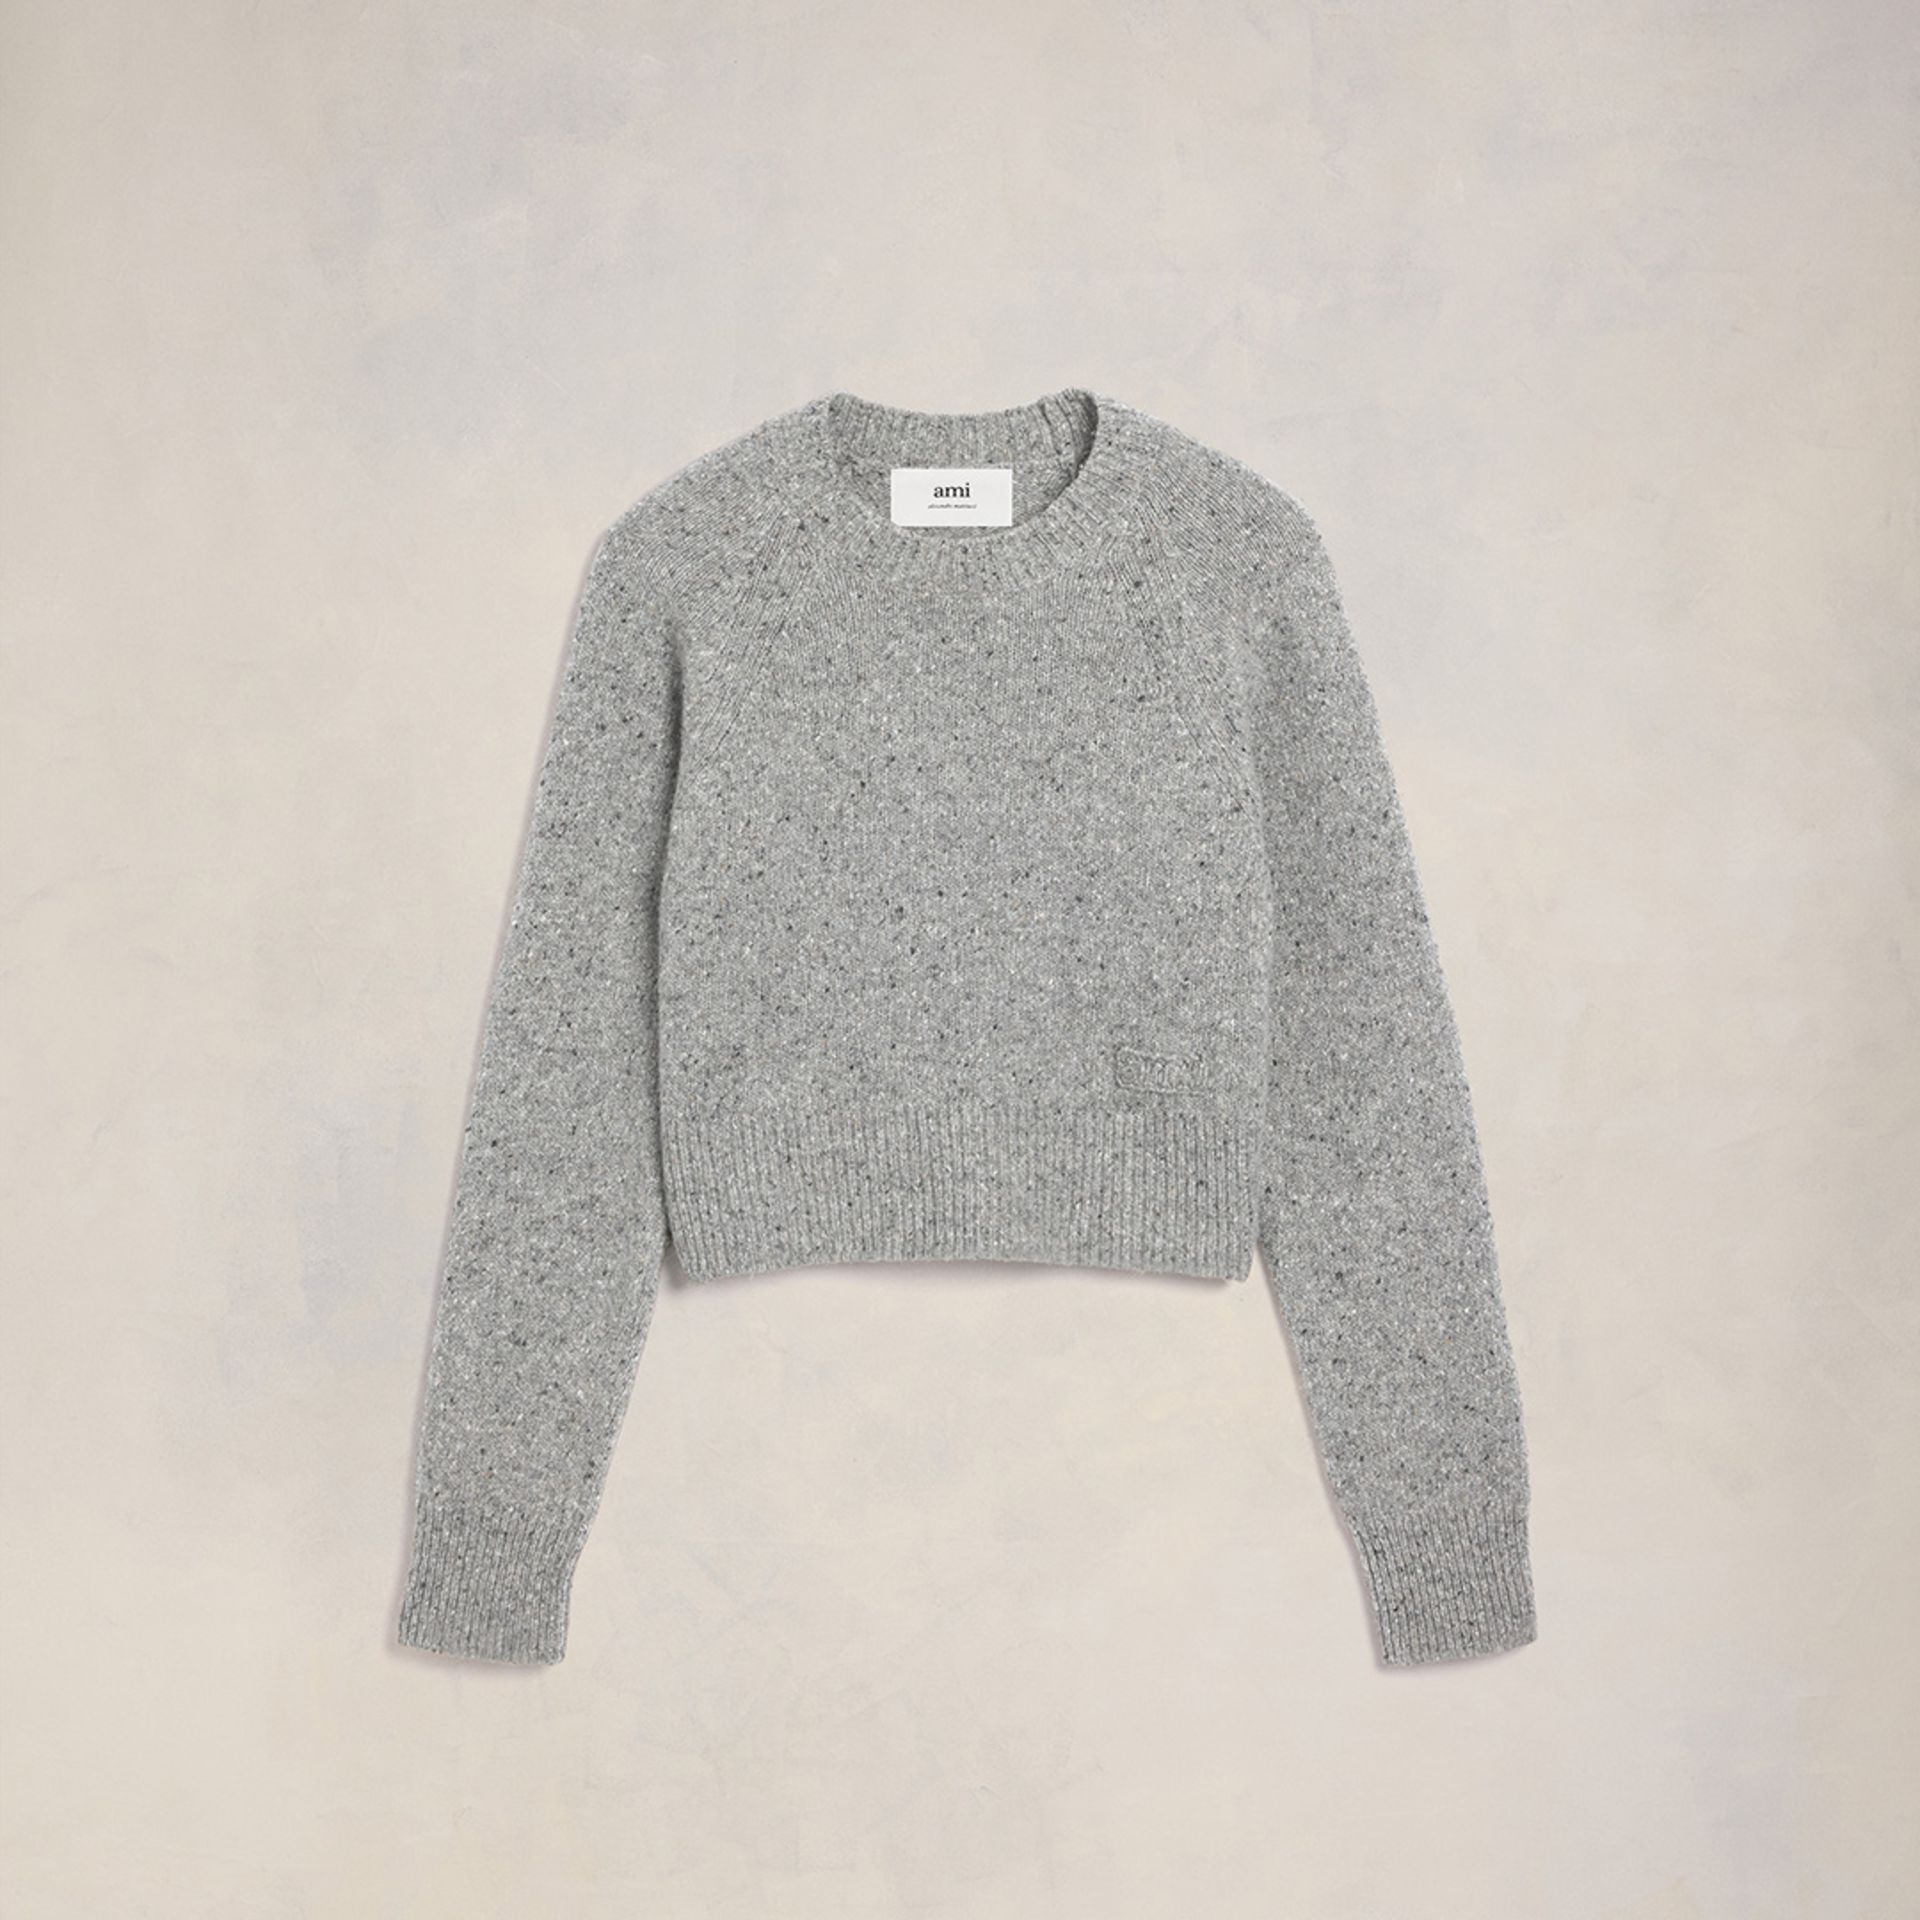 Ami Embroidery Crewneck Sweater - 2